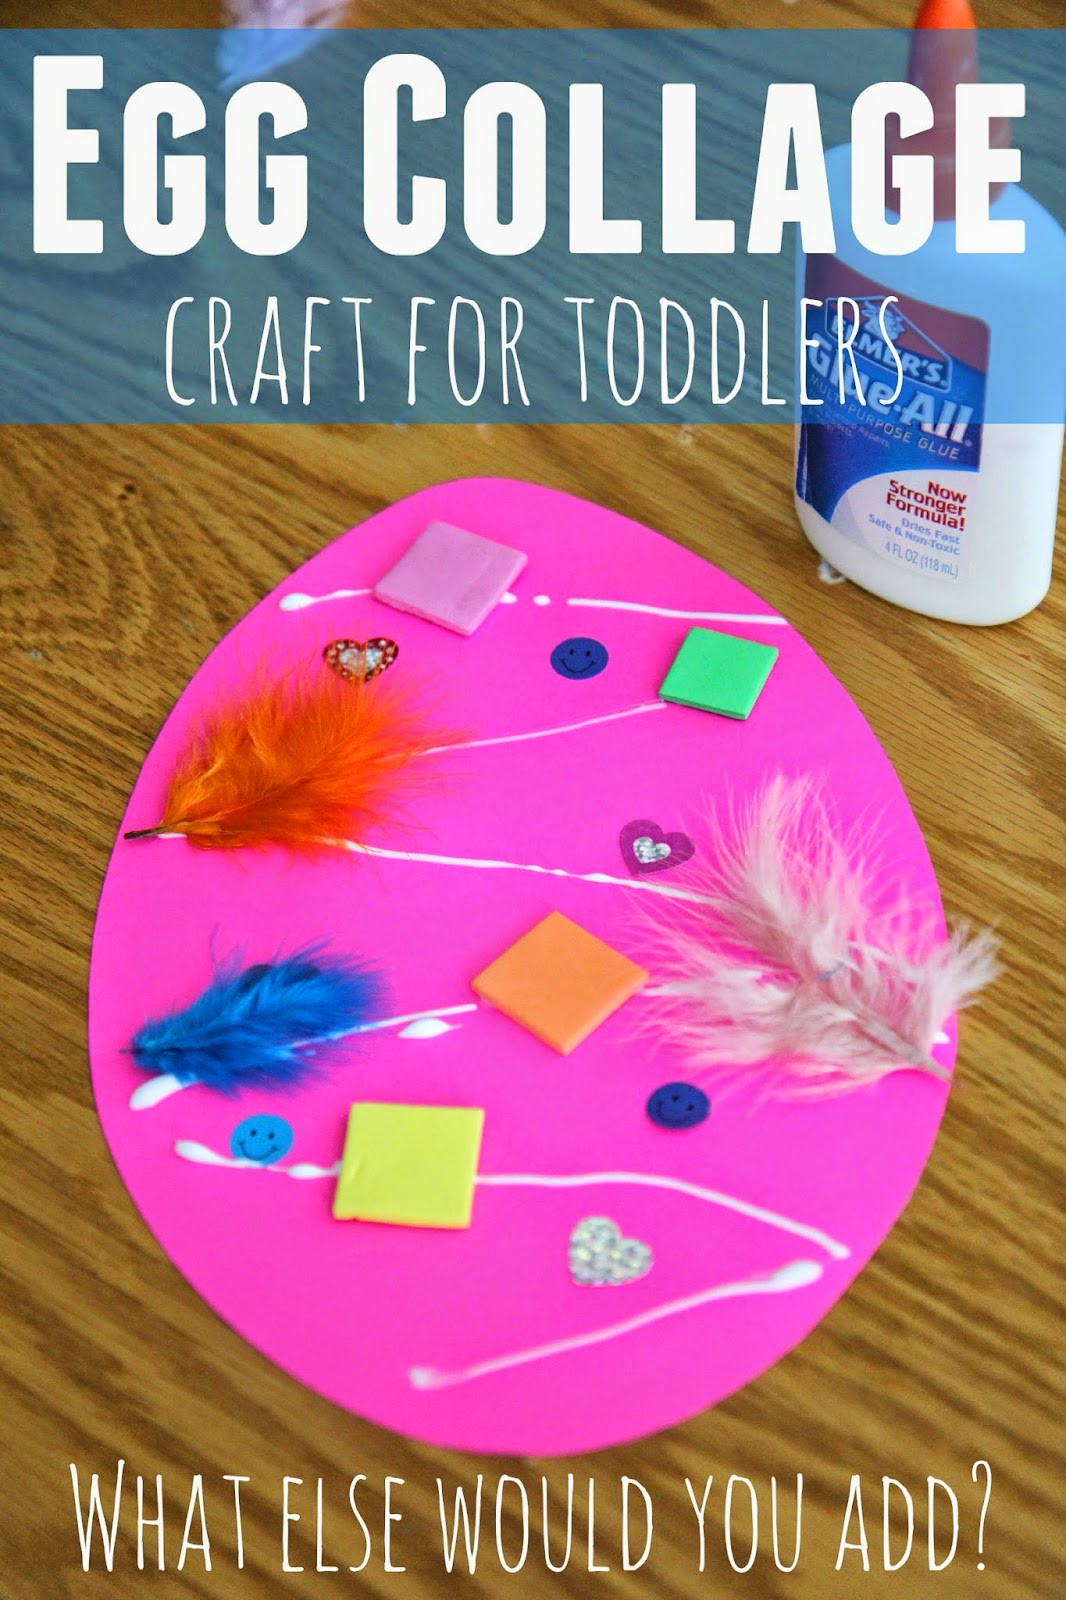 Toddler Easter Crafts
 Toddler Approved Easter Egg Collage Craft for Toddlers